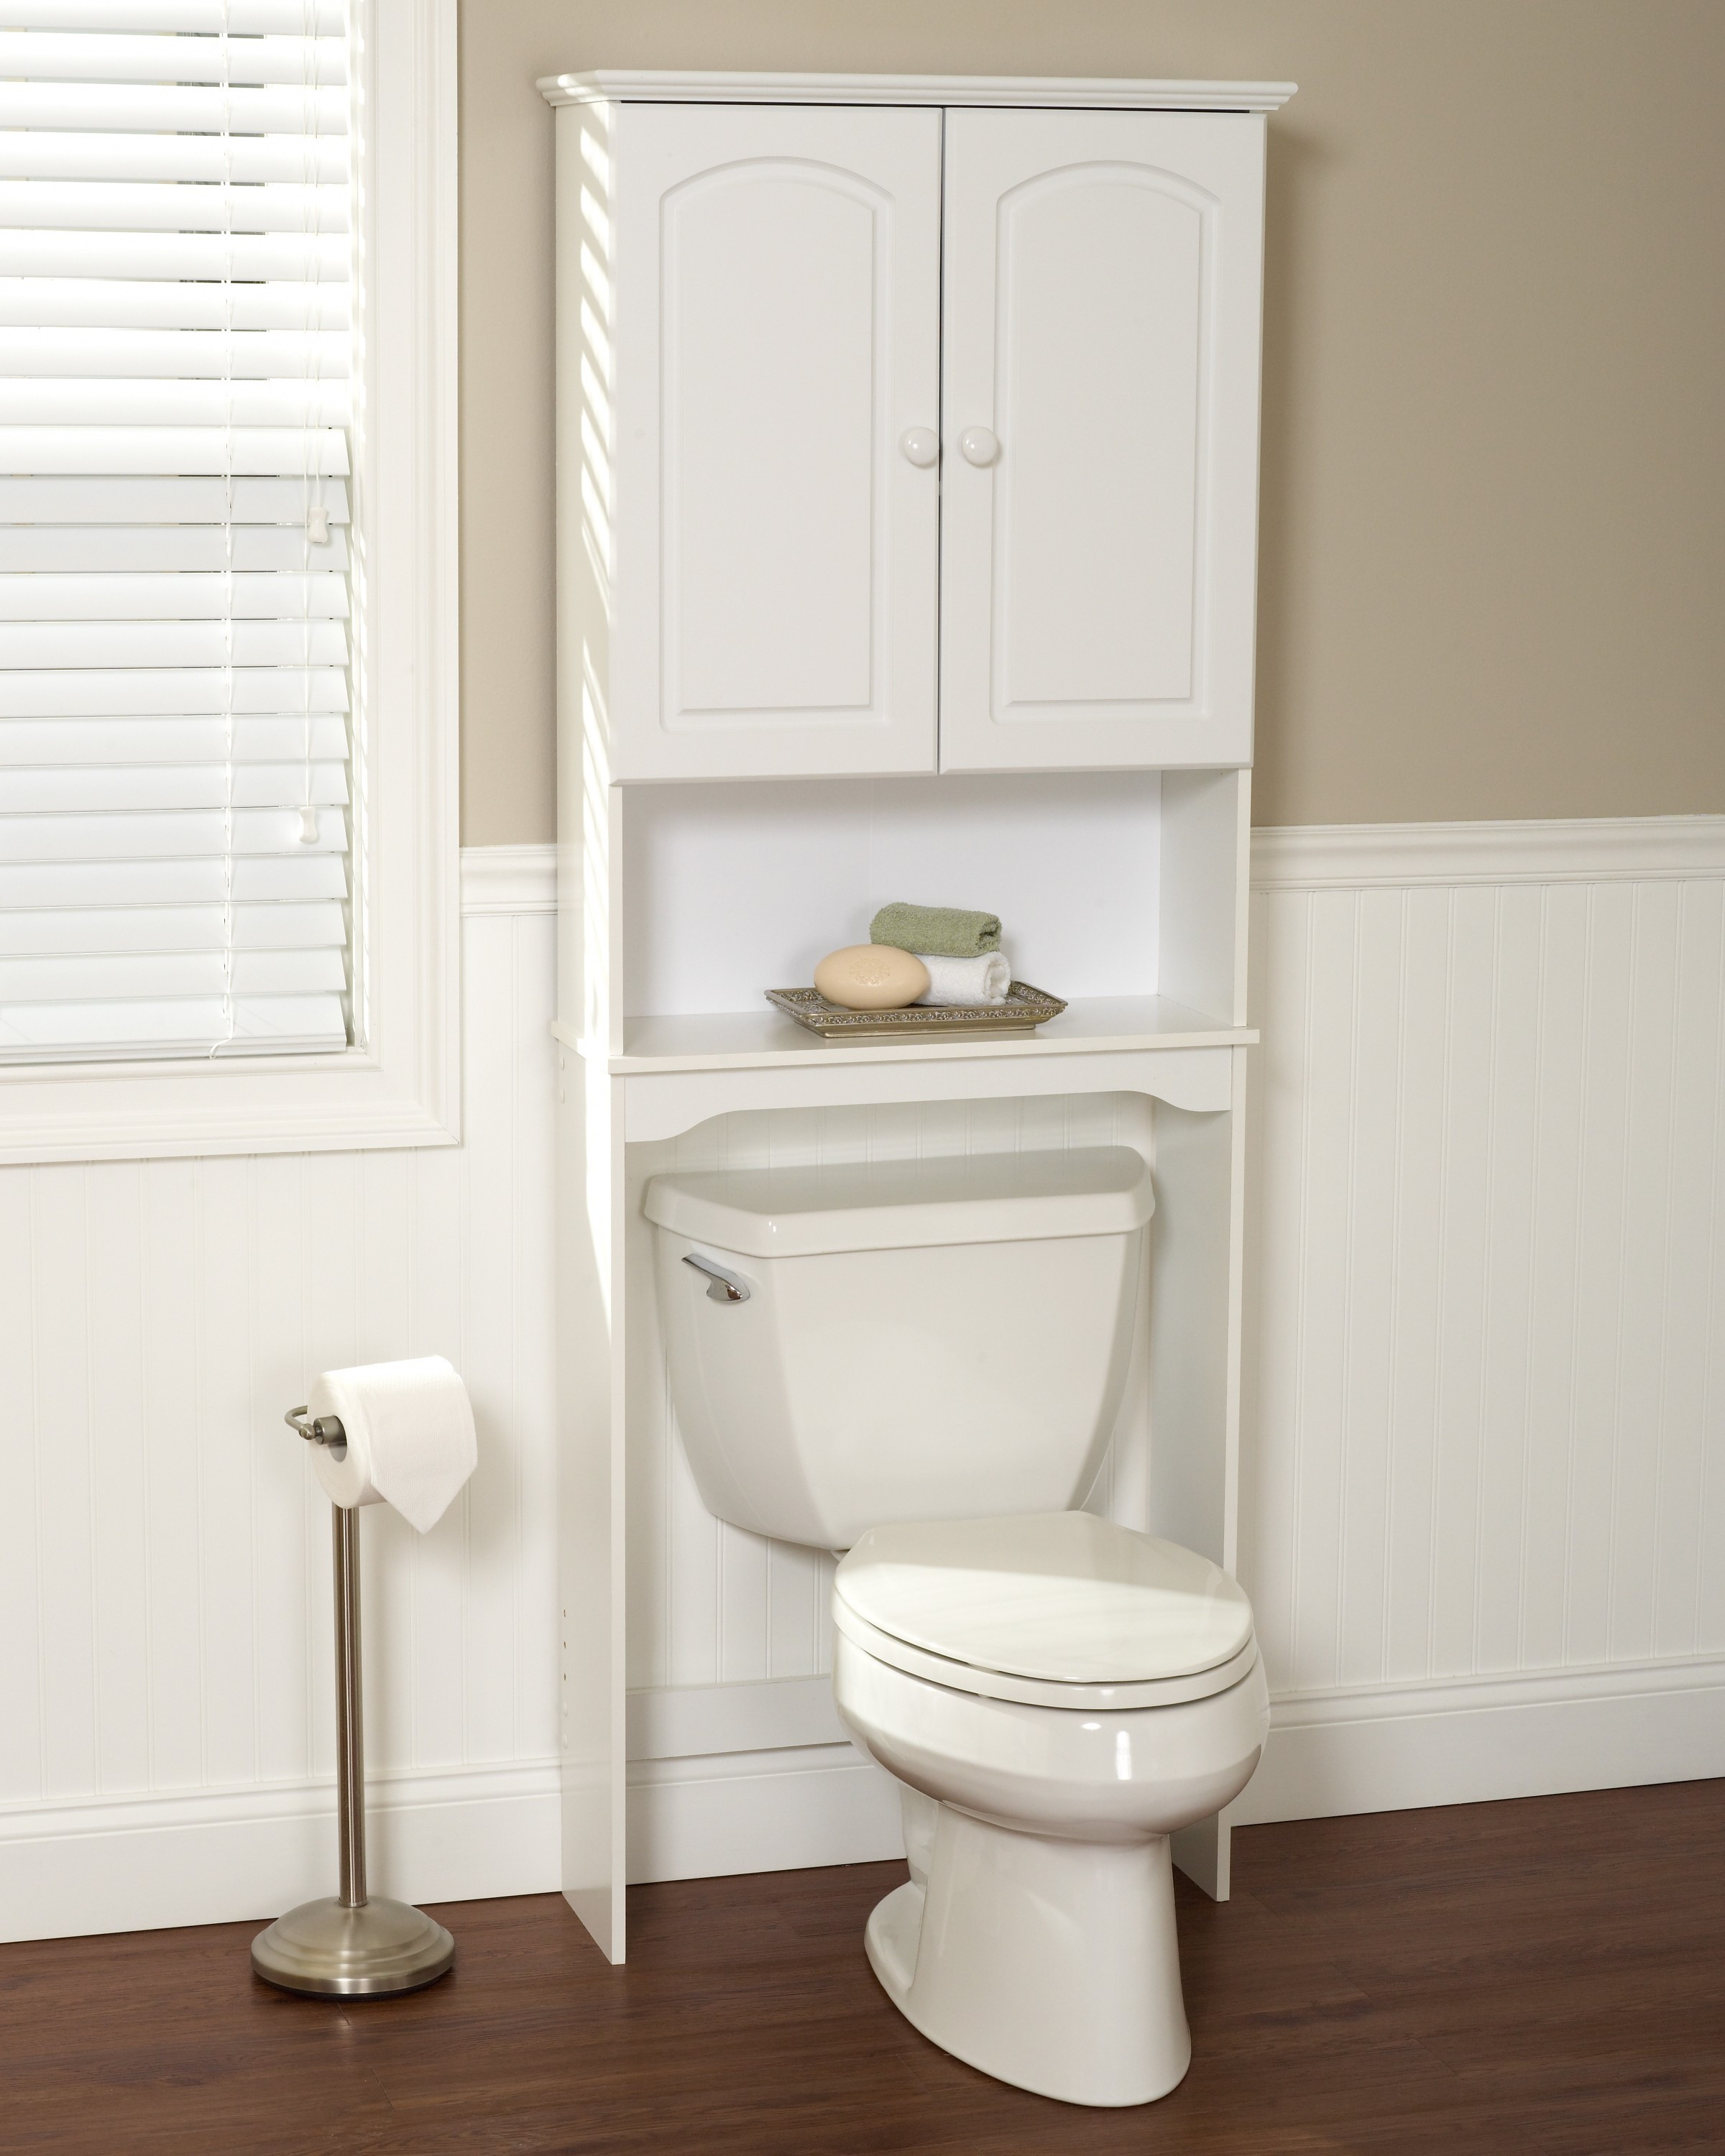 Best ideas about Target Bathroom Storage
. Save or Pin Bathroom Exciting Tar Bathroom Storage With White Now.